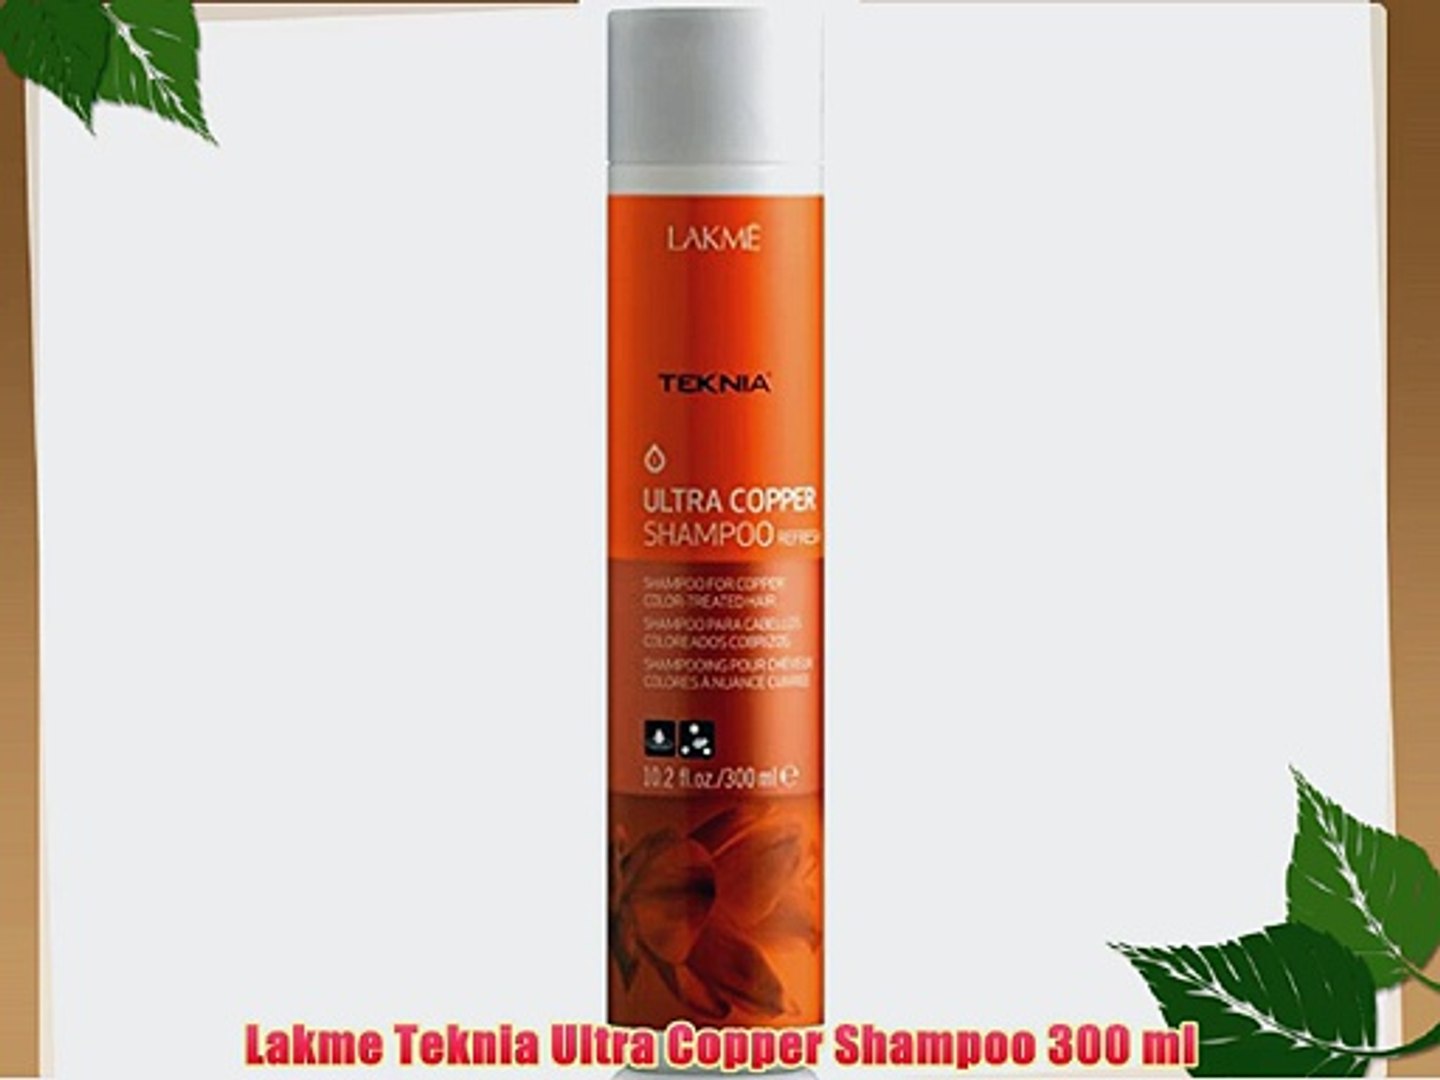 Lakme Teknia Ultra Copper Shampoo 300 ml video